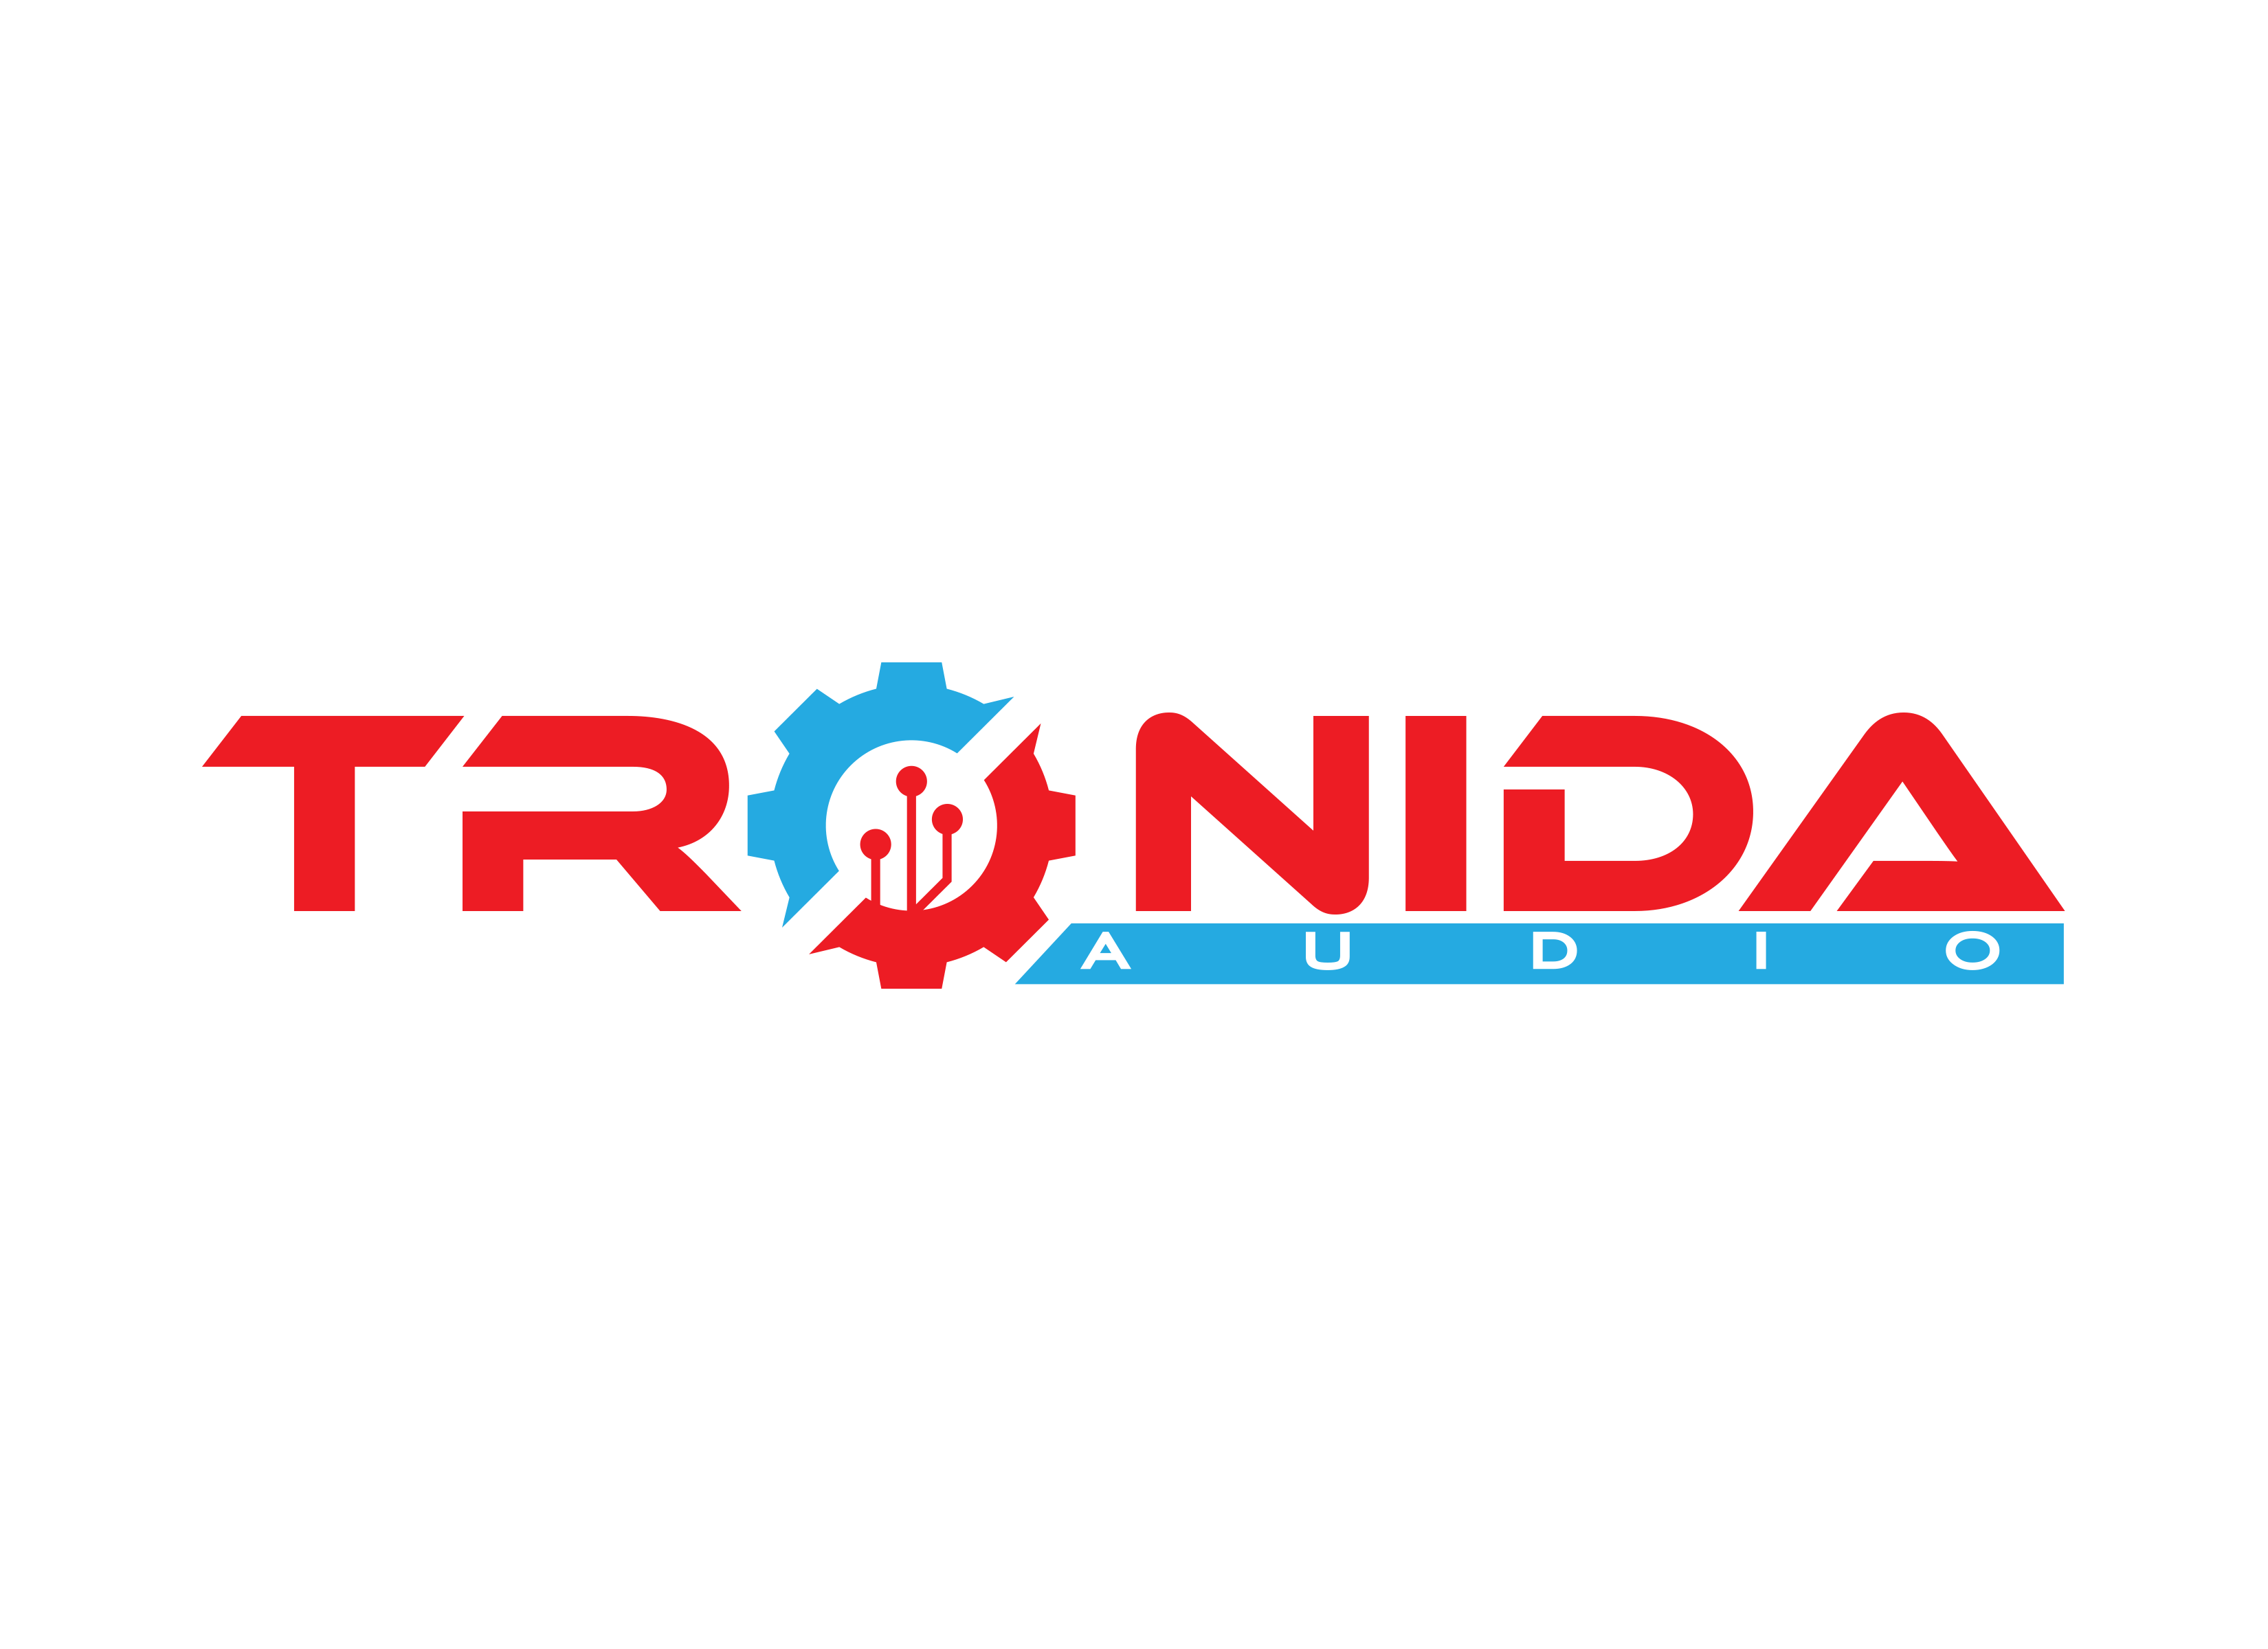 Tronida Audio